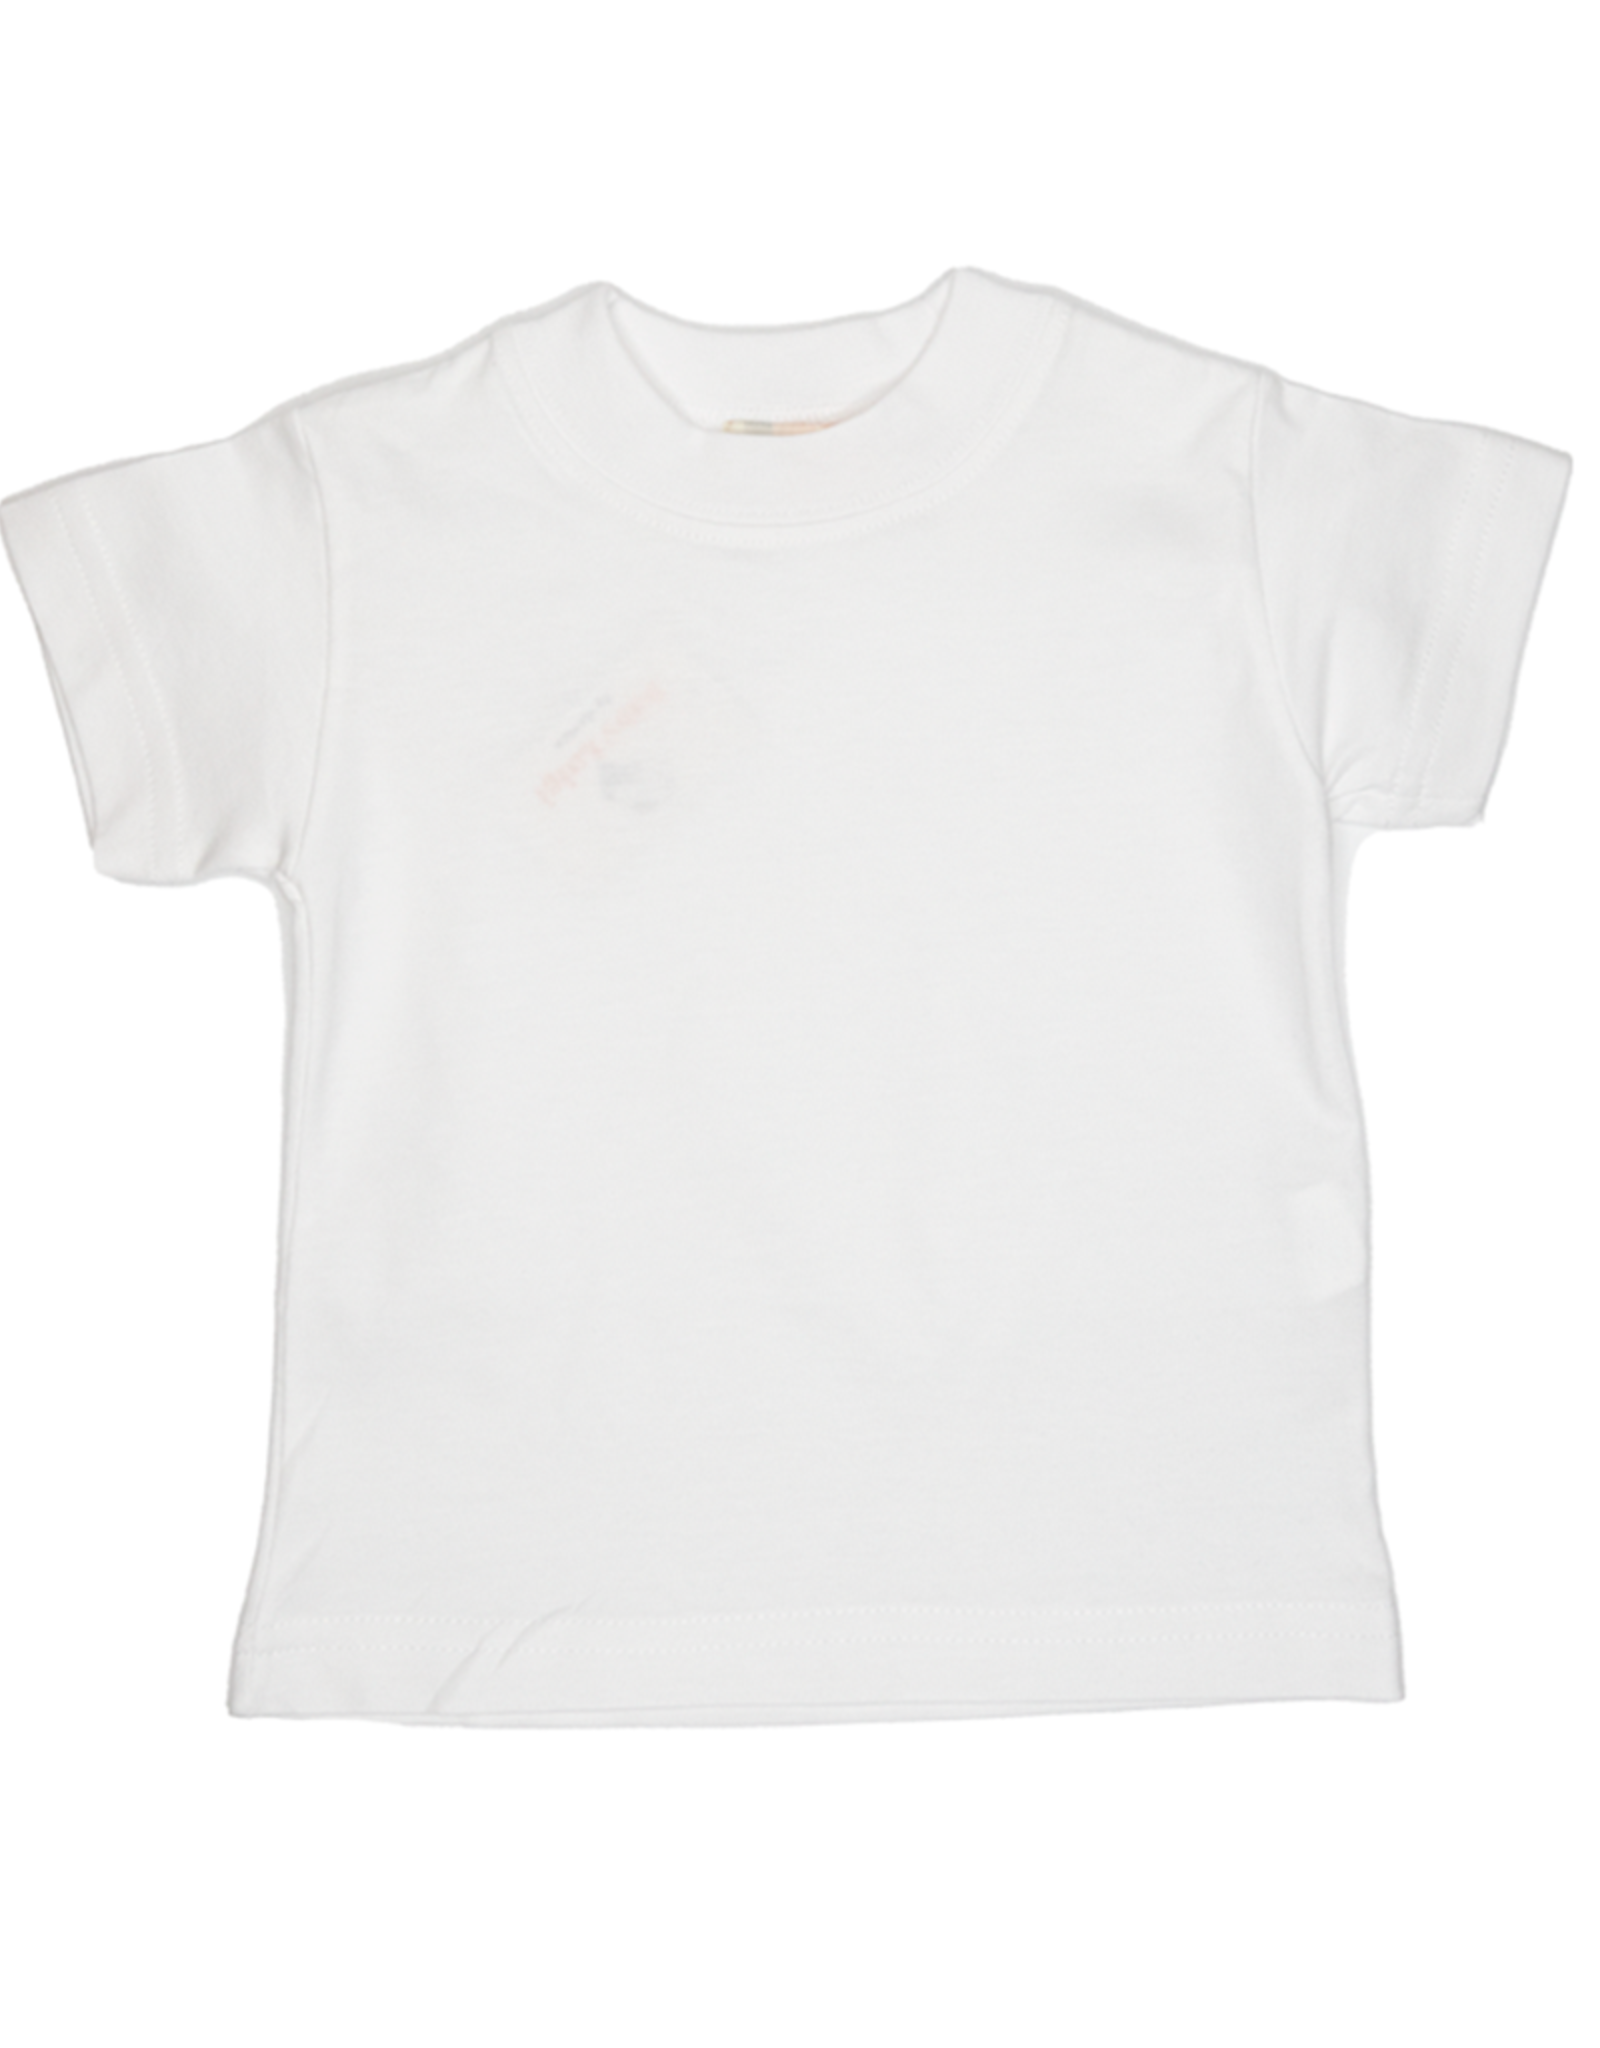 Luigi S/S Solid Shirt White 01